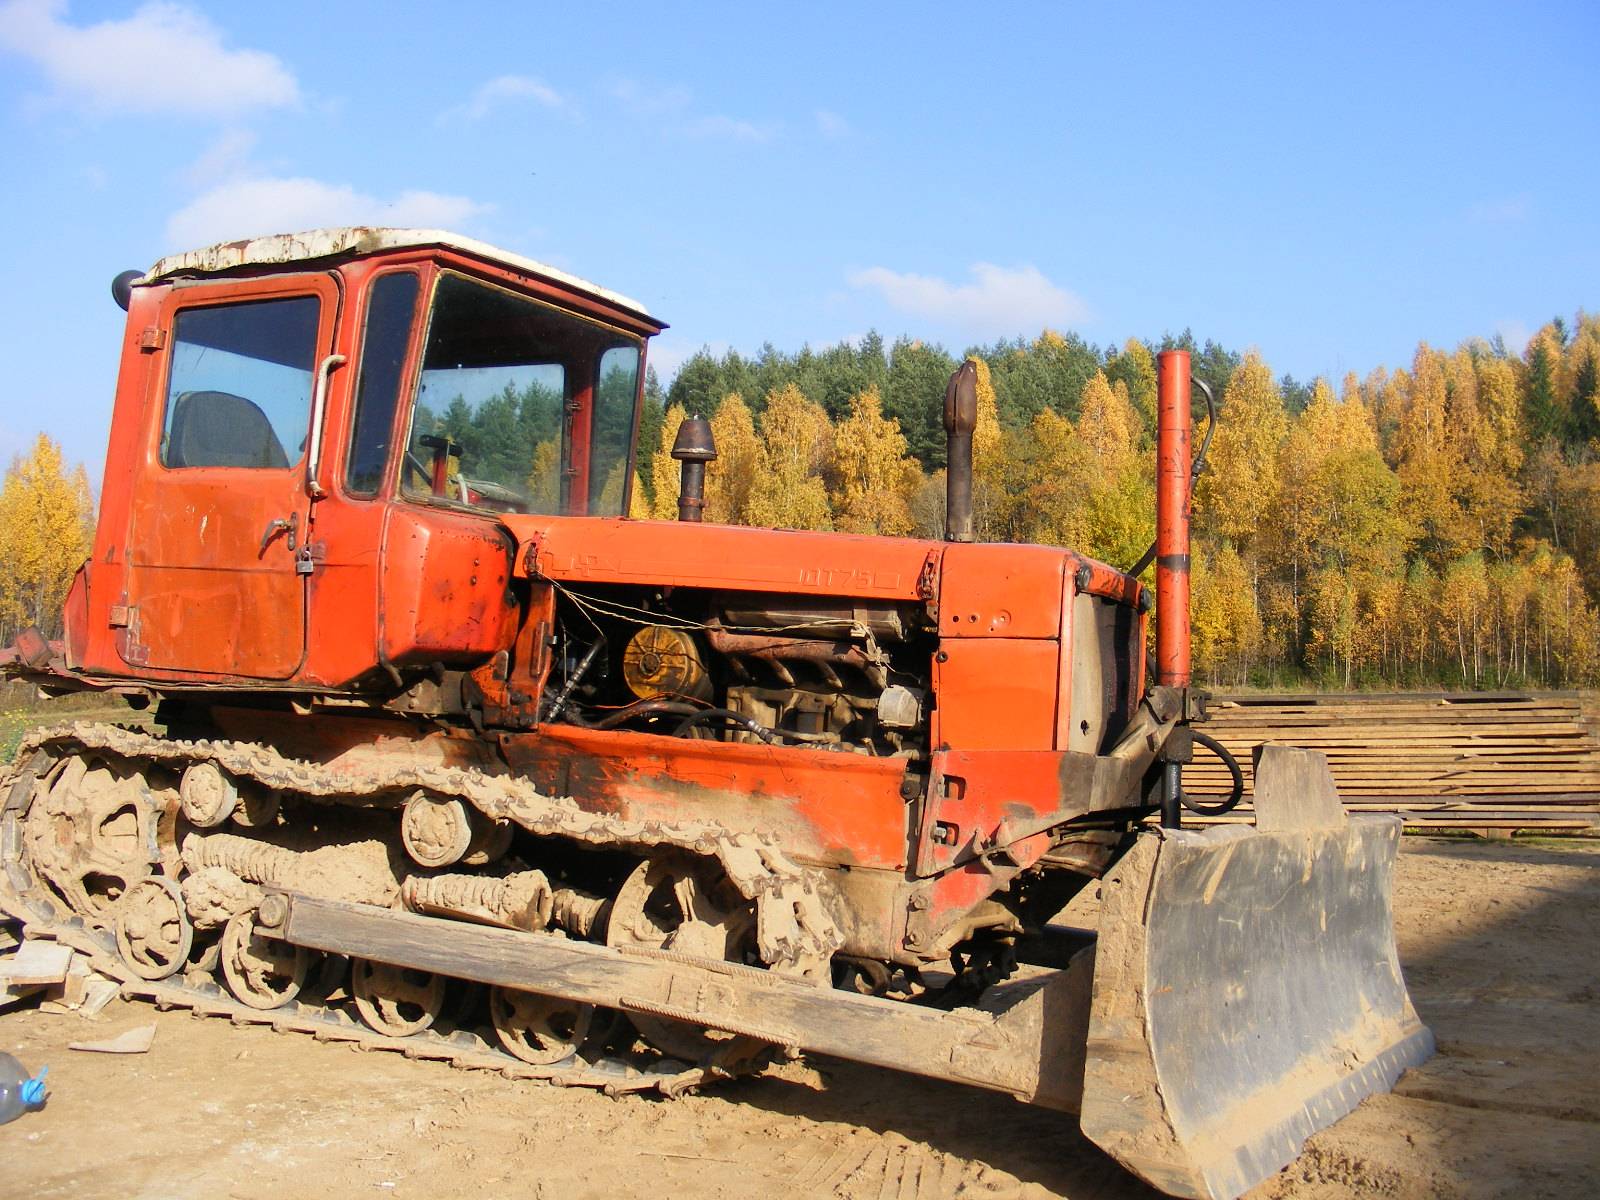 Трактор дт-75 казахстан: технические характеристики